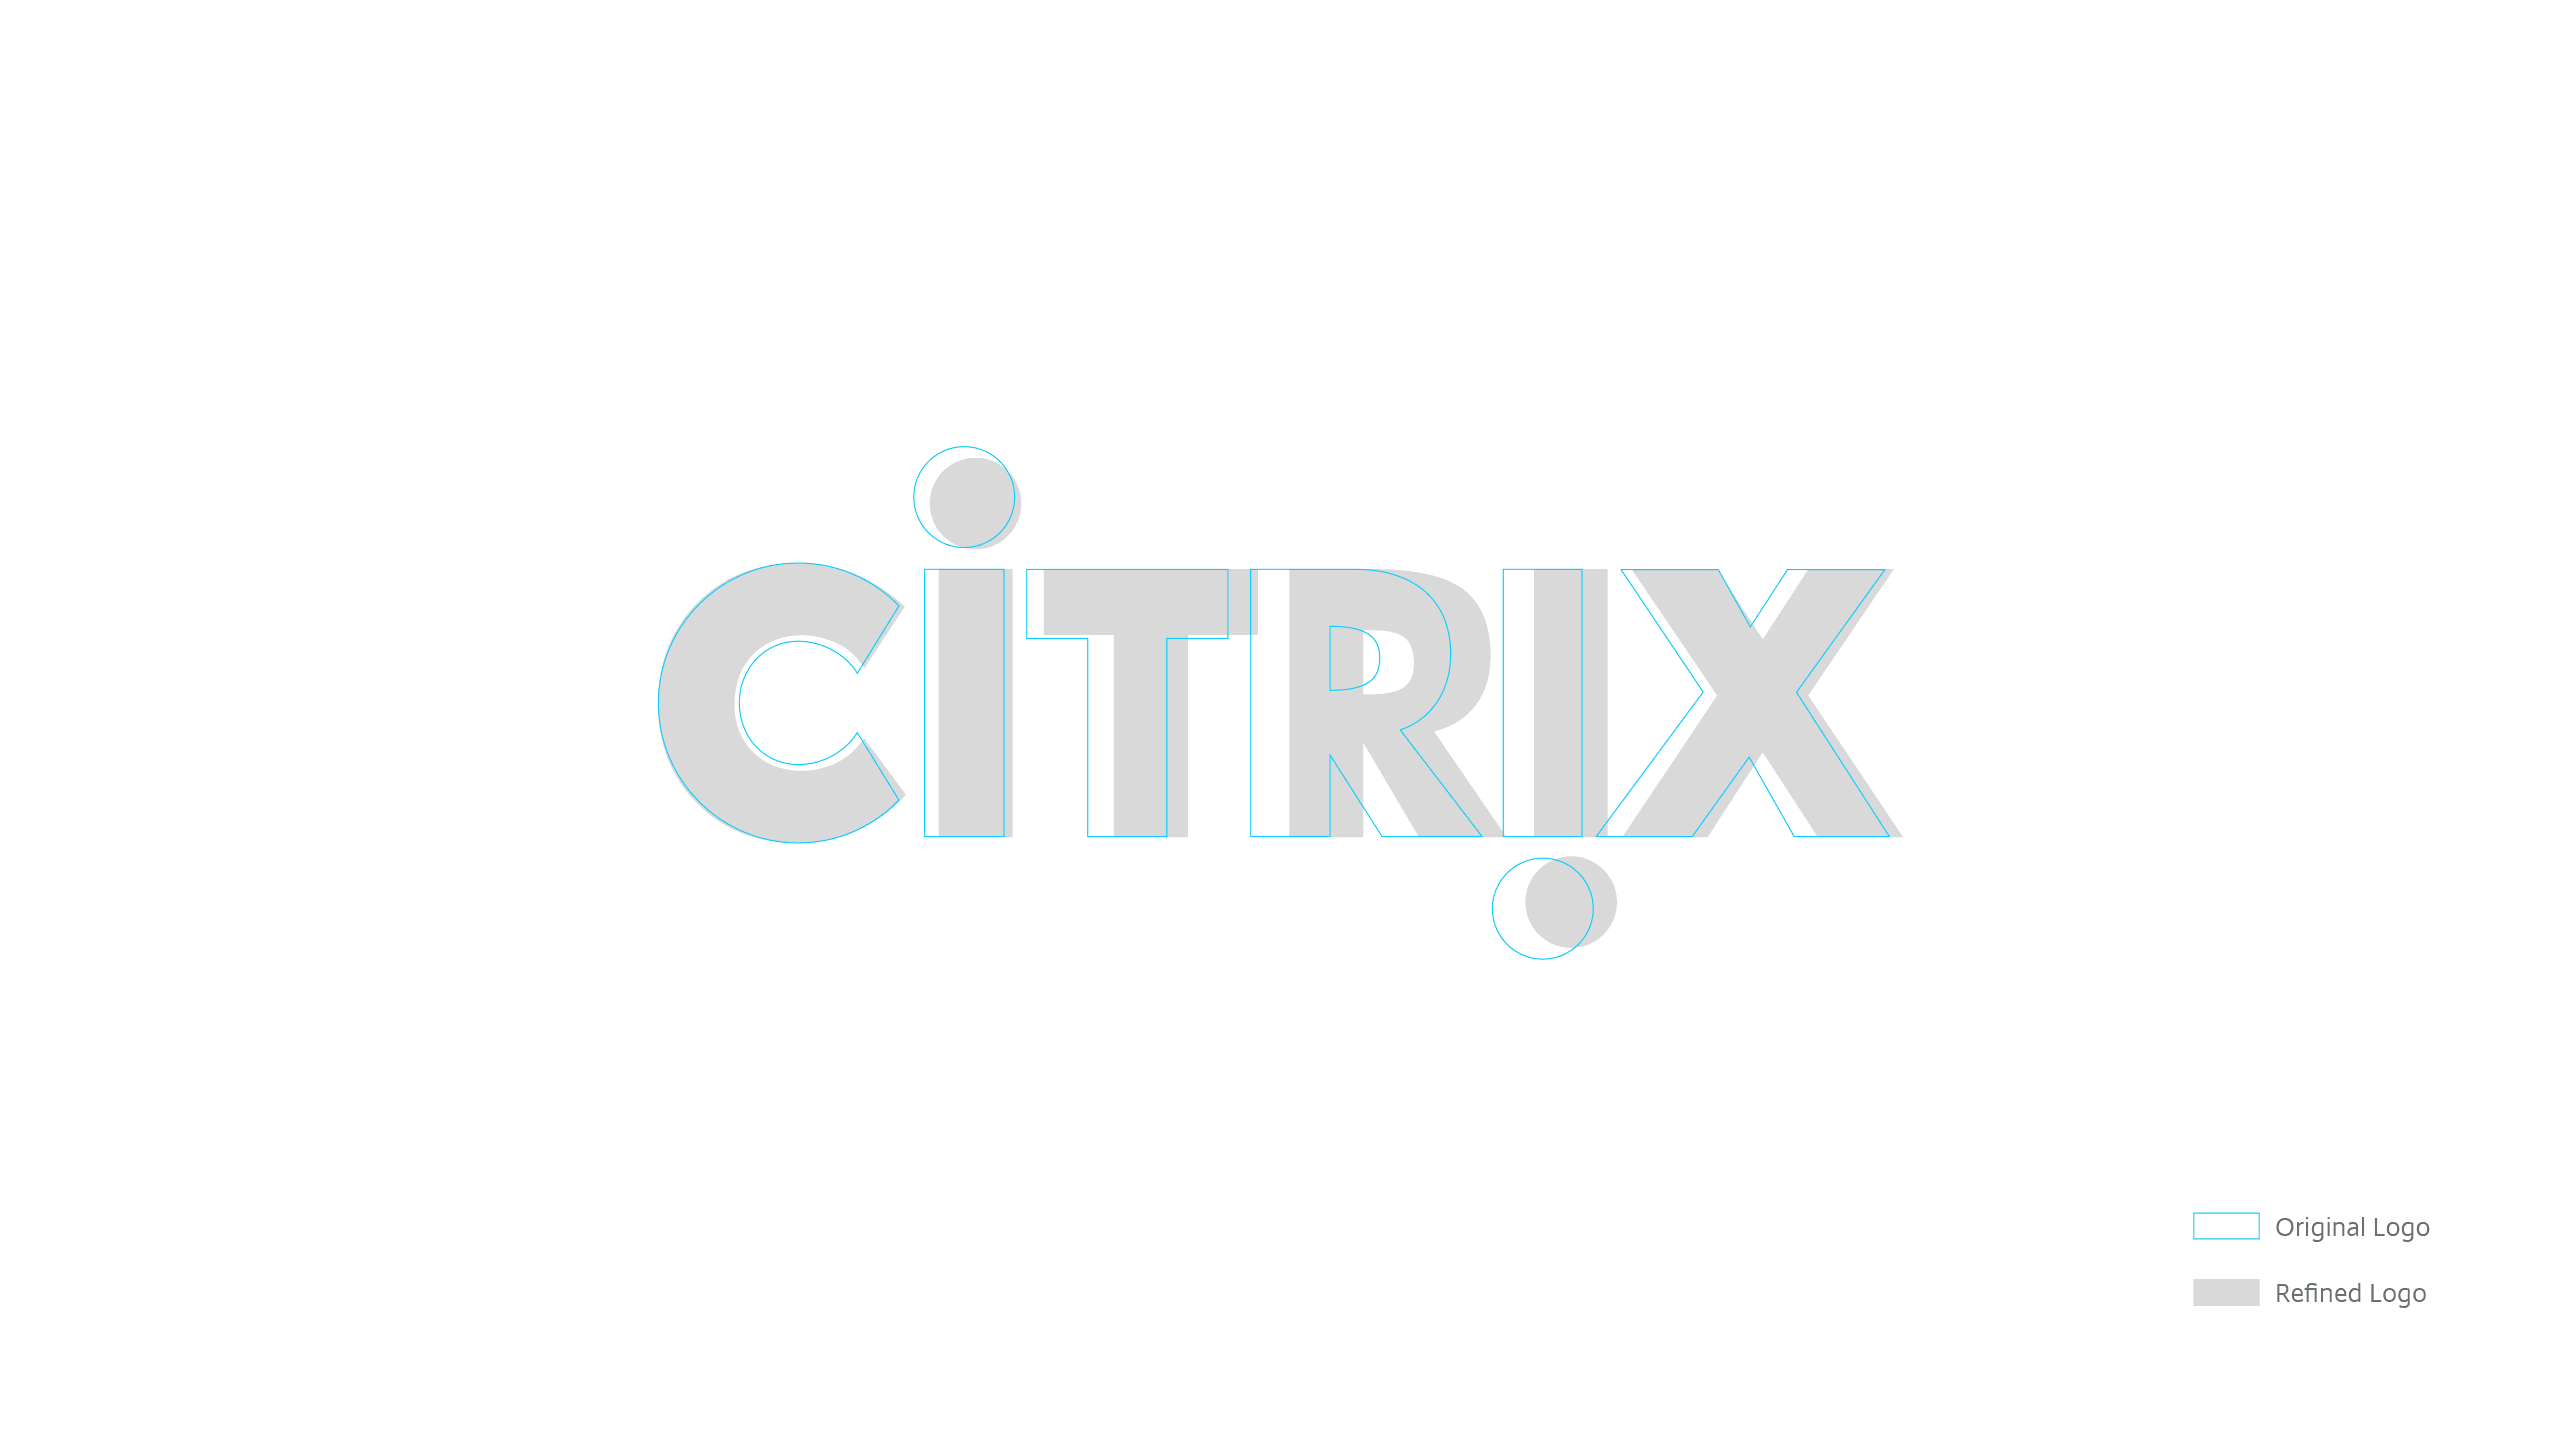 Citrix Brand Original Logo Redrawn